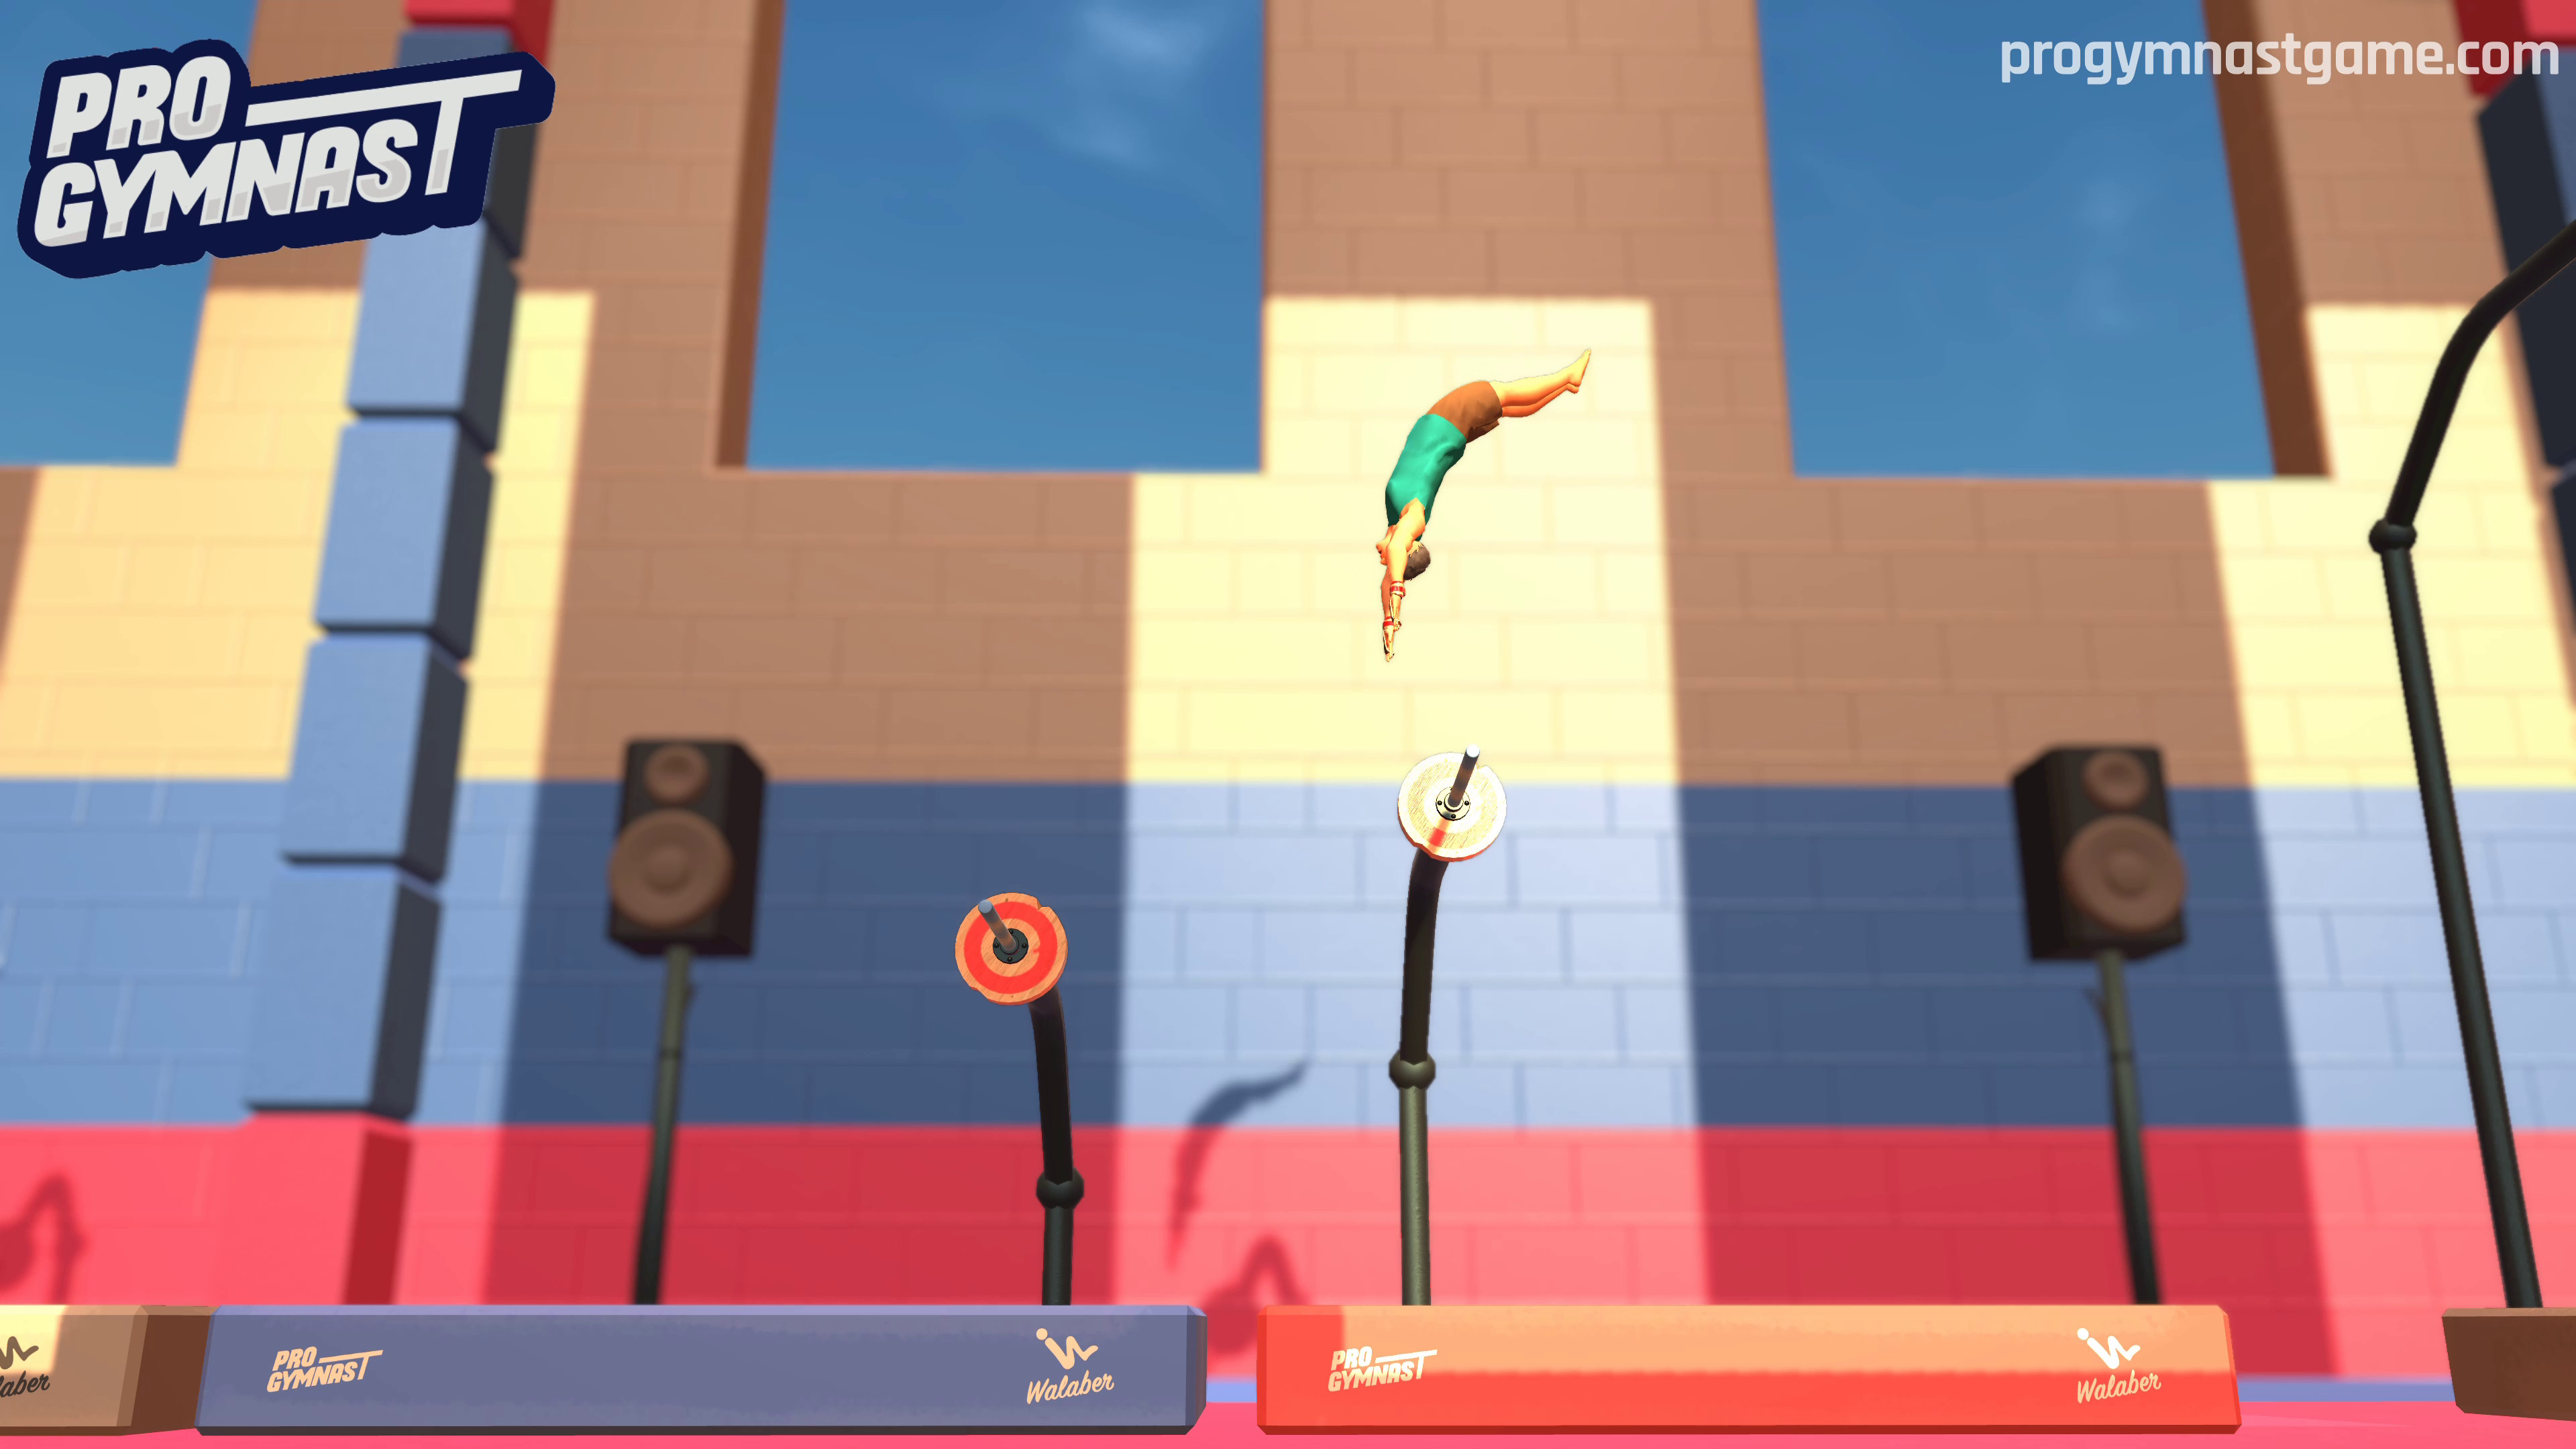 Pro Gymnast screenshot